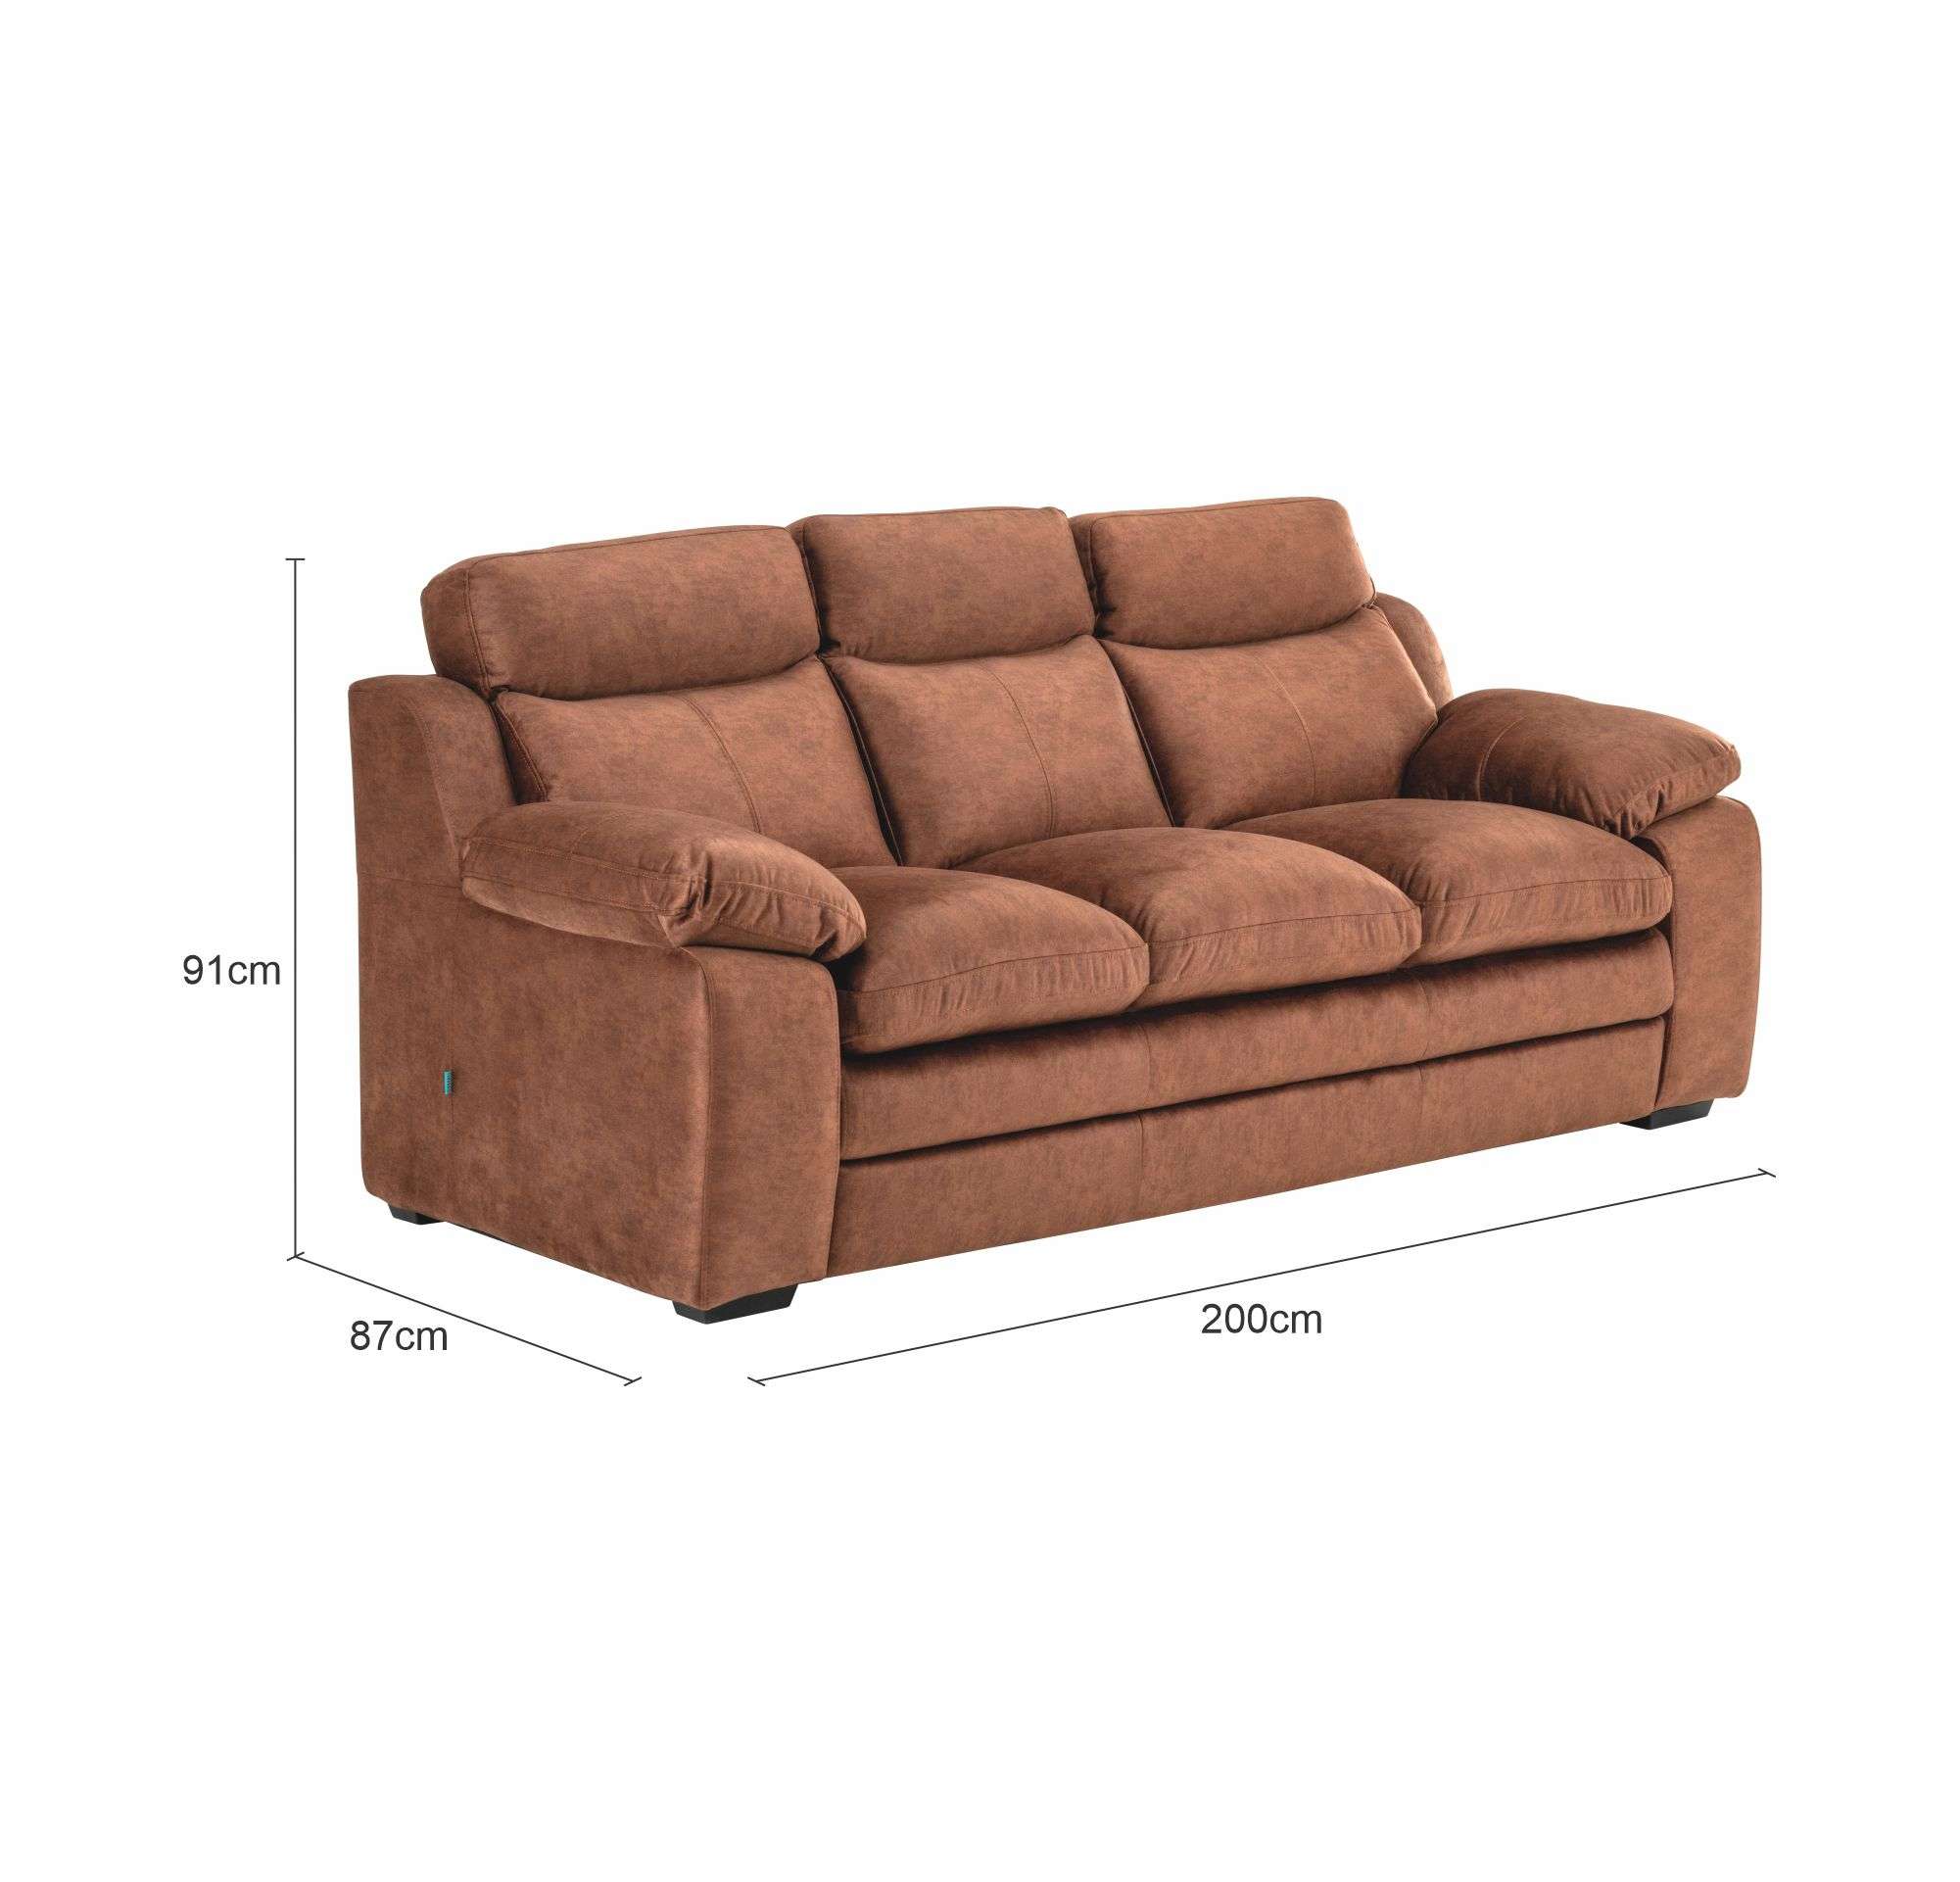 LDRSPX003-Proxima Sofa 3 Seater-NAE03